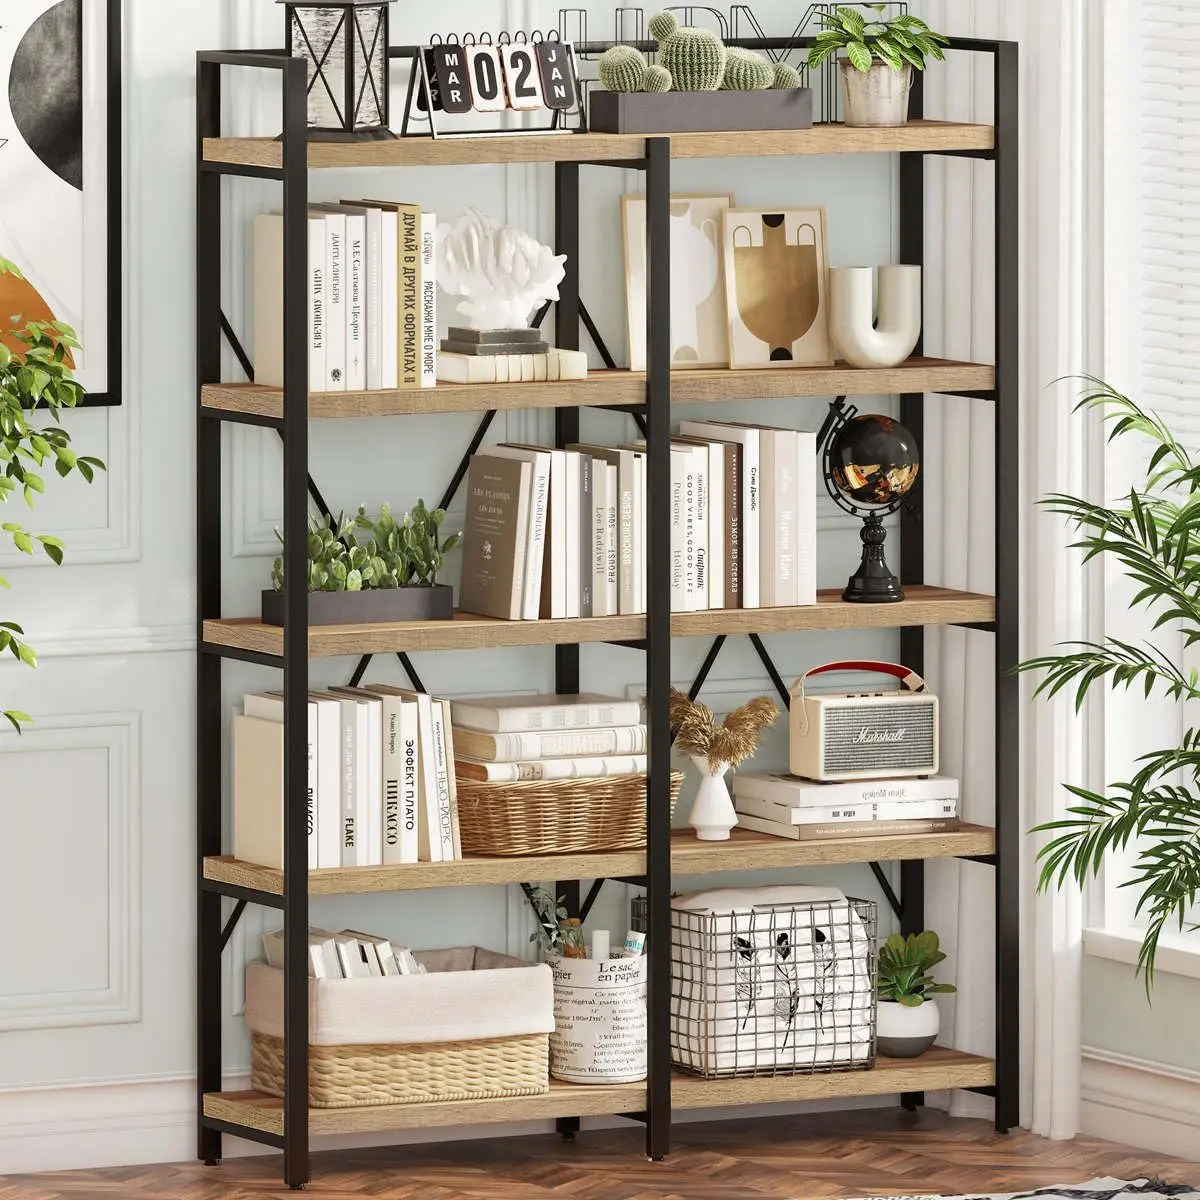 

FATORRI Bookshelf, Industrial 5 Tier, Rustic Wood Etagere Bookcase, Metal Tall Book Shelf with Large Open Shelving Unit